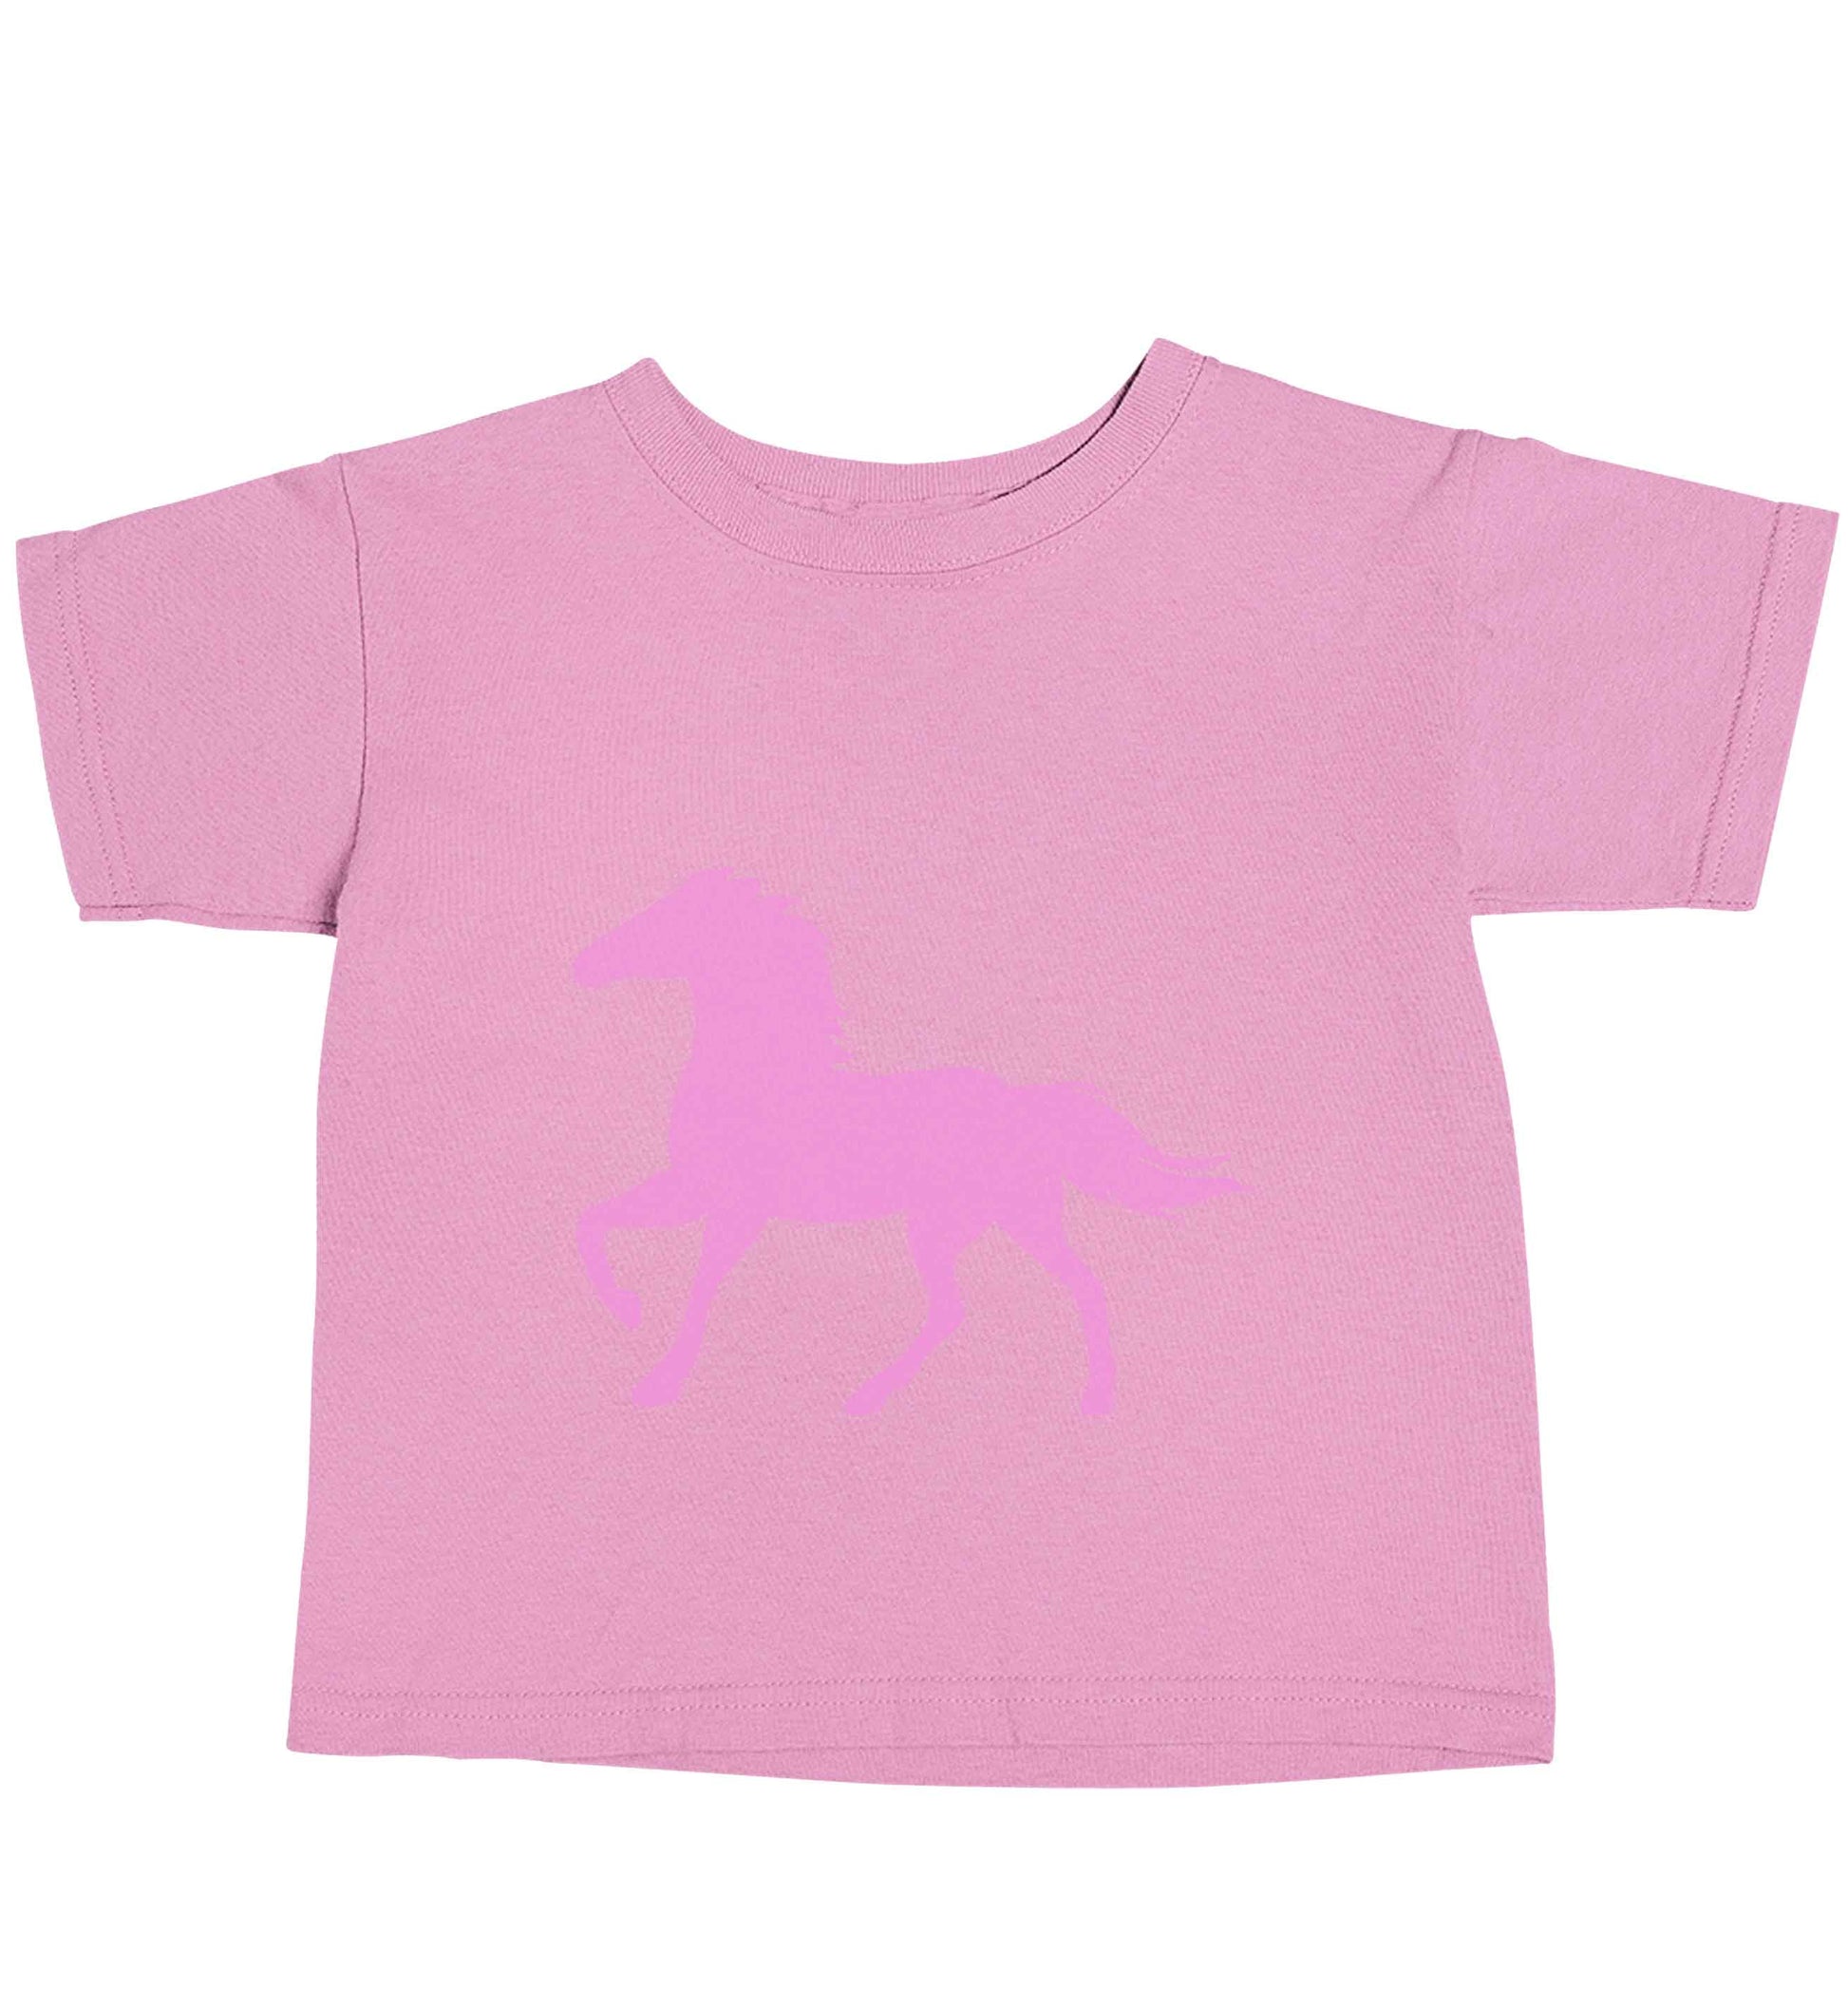 Pink horse light pink baby toddler Tshirt 2 Years